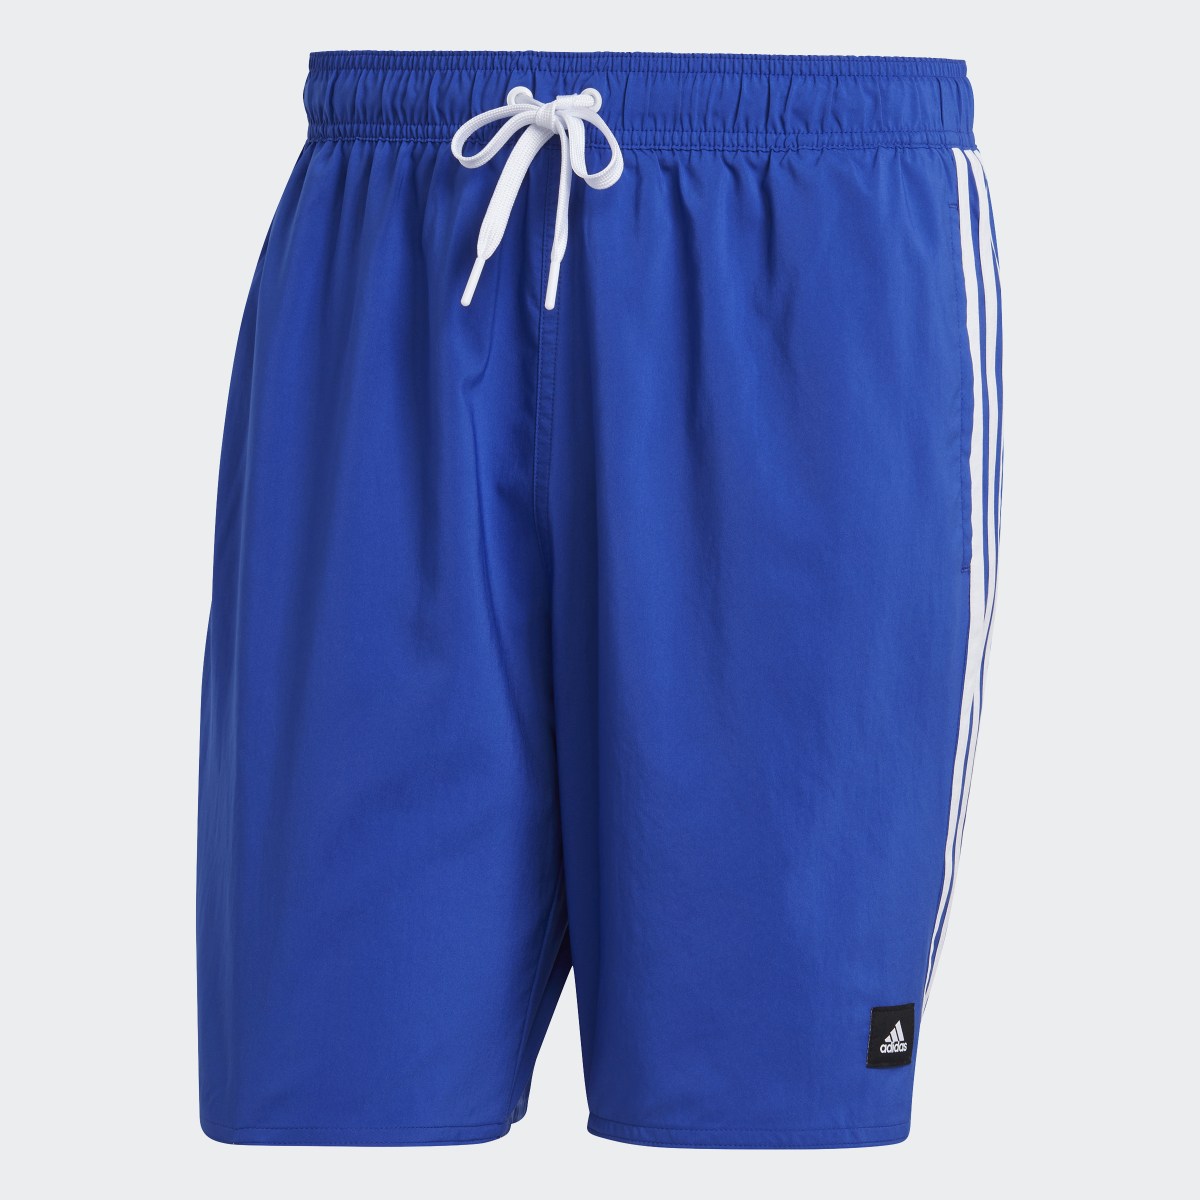 Adidas 3-Stripes CLX Swim Shorts. 4